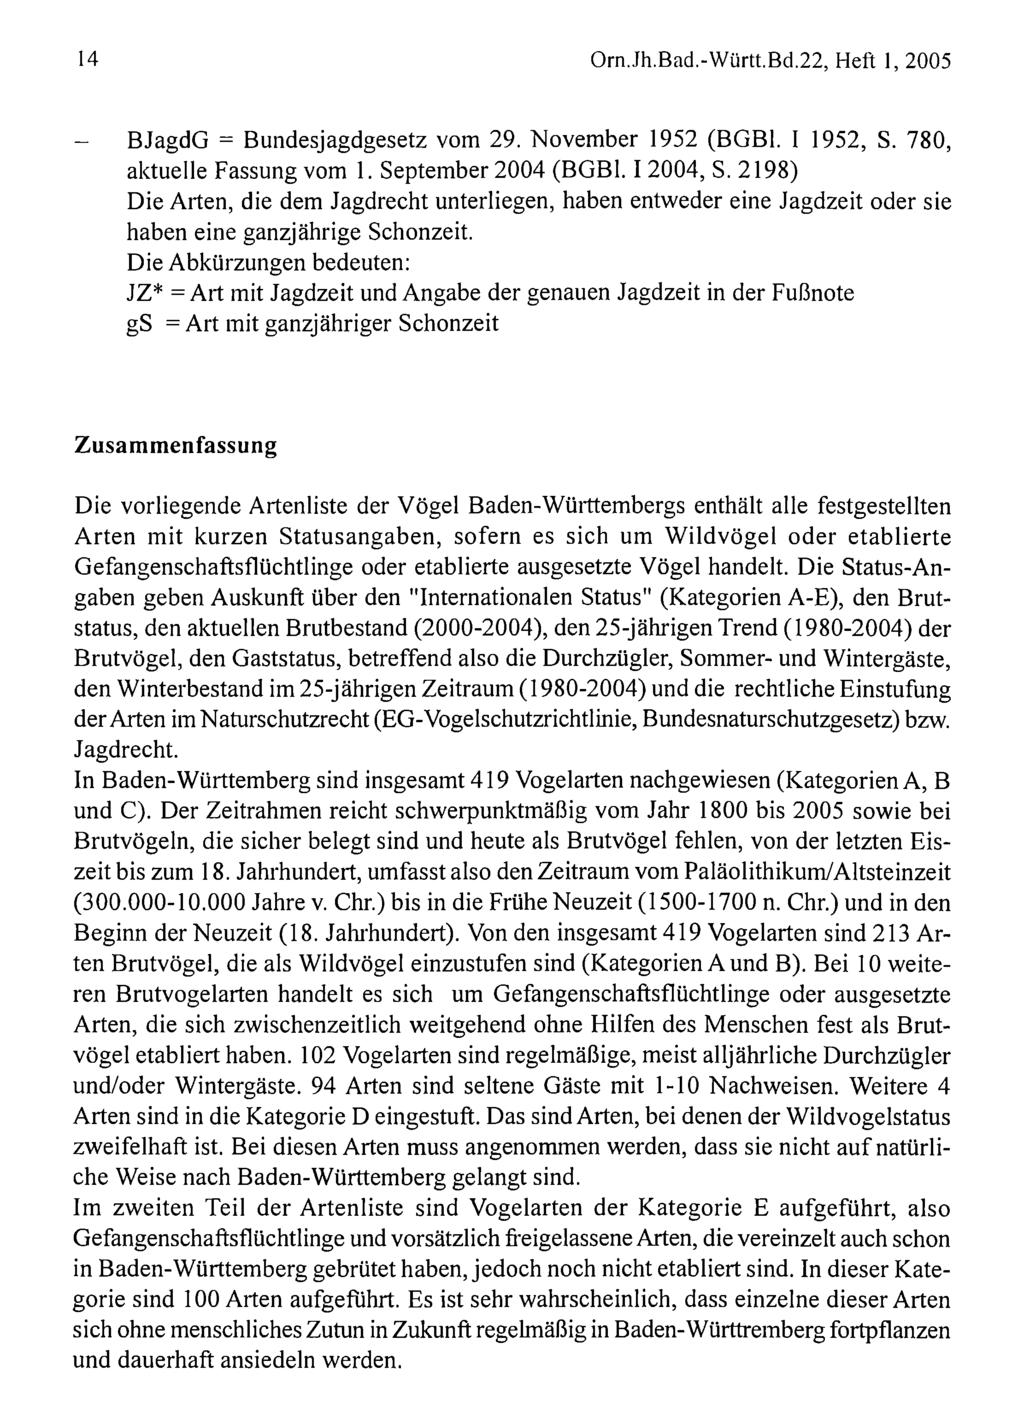 Ornithologische esellschaft Baden-Württemberg, download unter www.biologiezentrum.at 14 Orn.Jh.Bad.-Württ.Bd.22, Heft 1, 2005 - = Bundesjagdgesetz vom 29. November 1952 (BBl. I 1952, S.